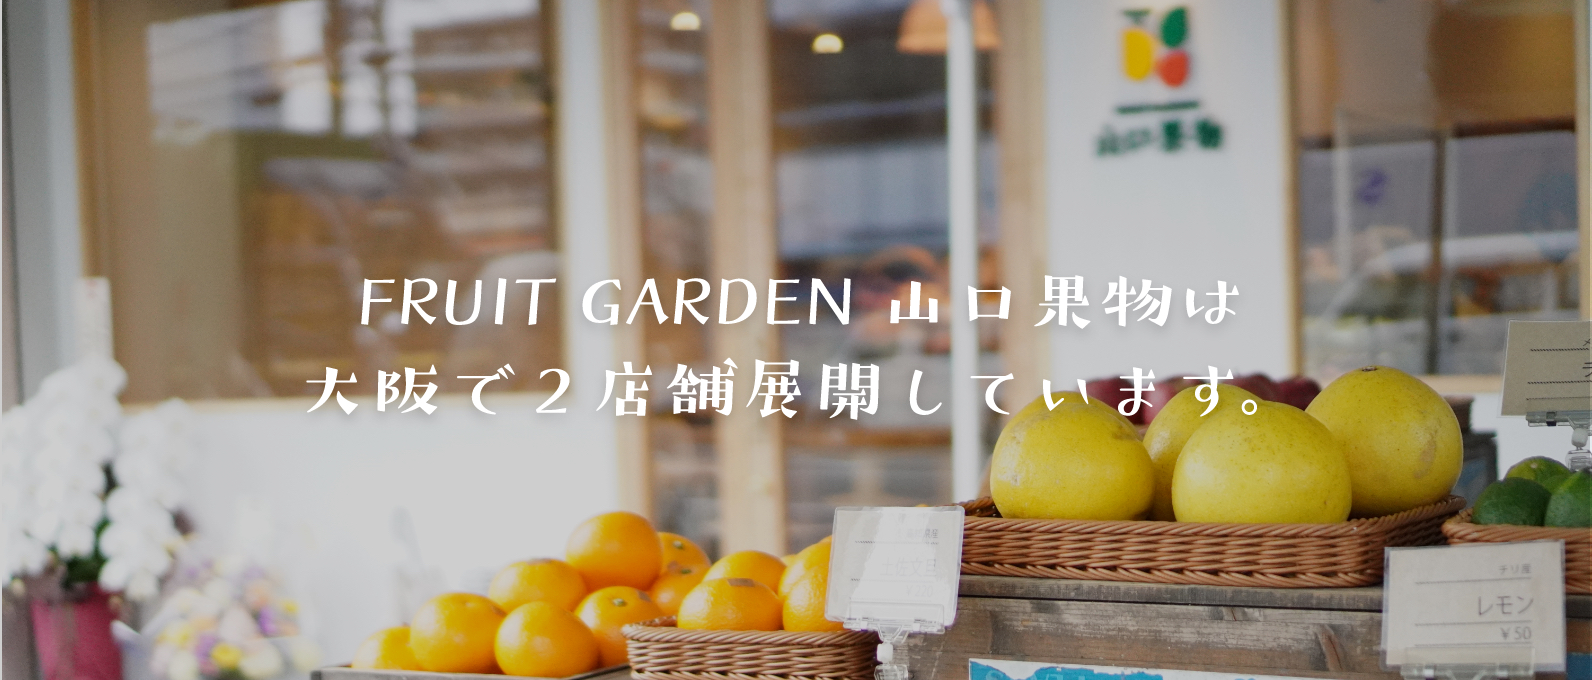 FRUIT GARDEN 山口果物は大阪で２店舗展開しています。